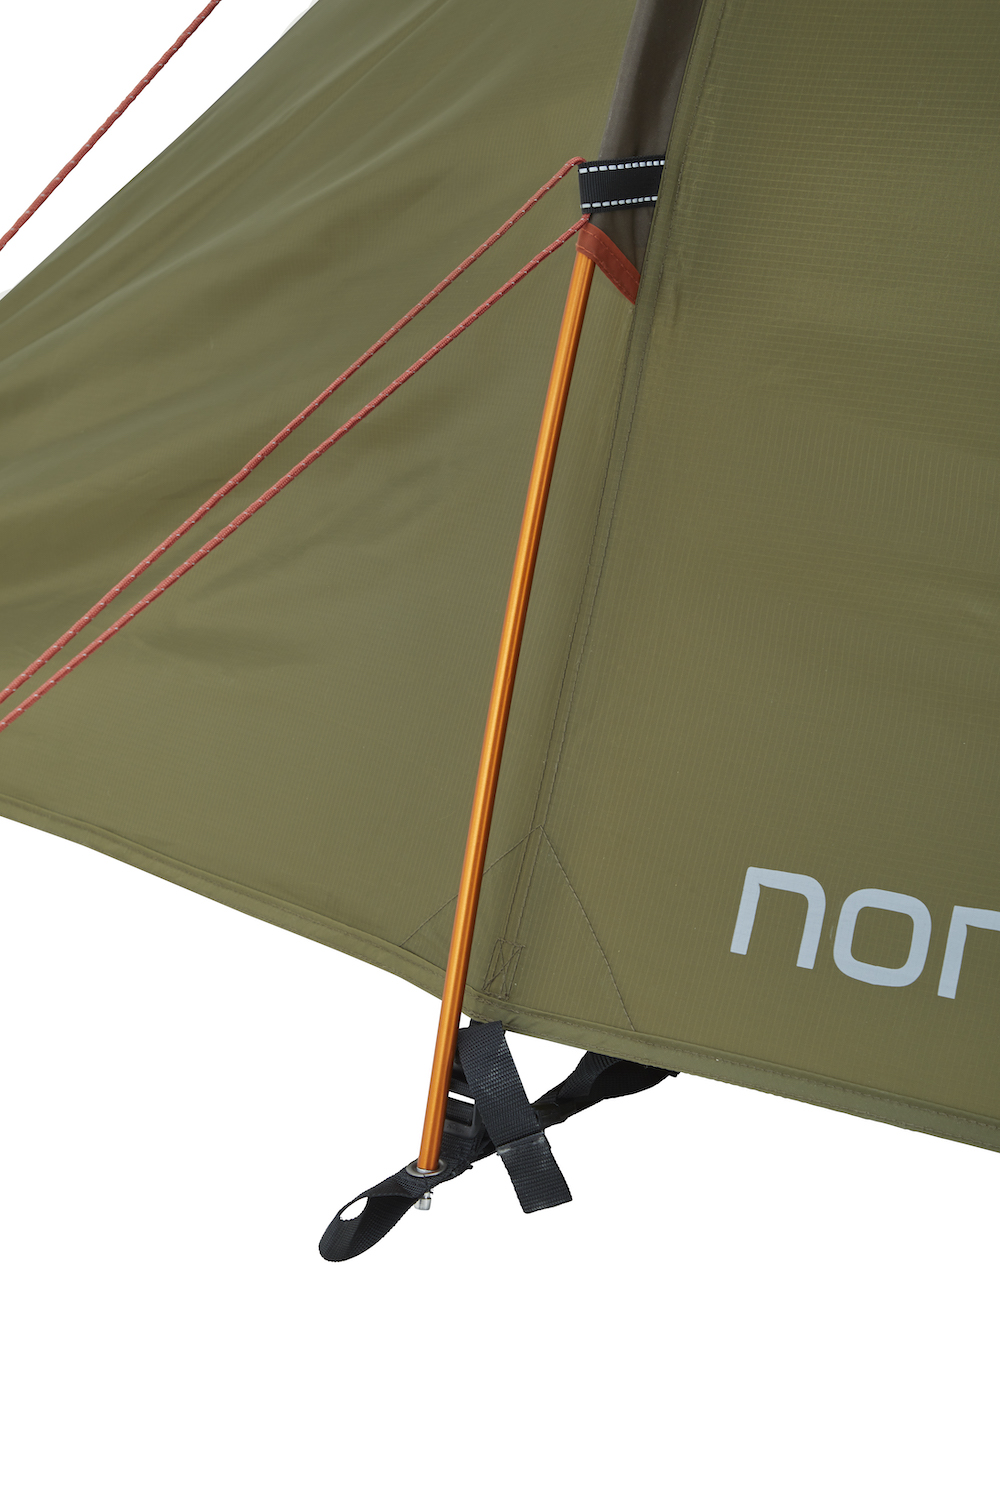 Nordisk - Oppland 2 PU, Zwei-Personen Zelt